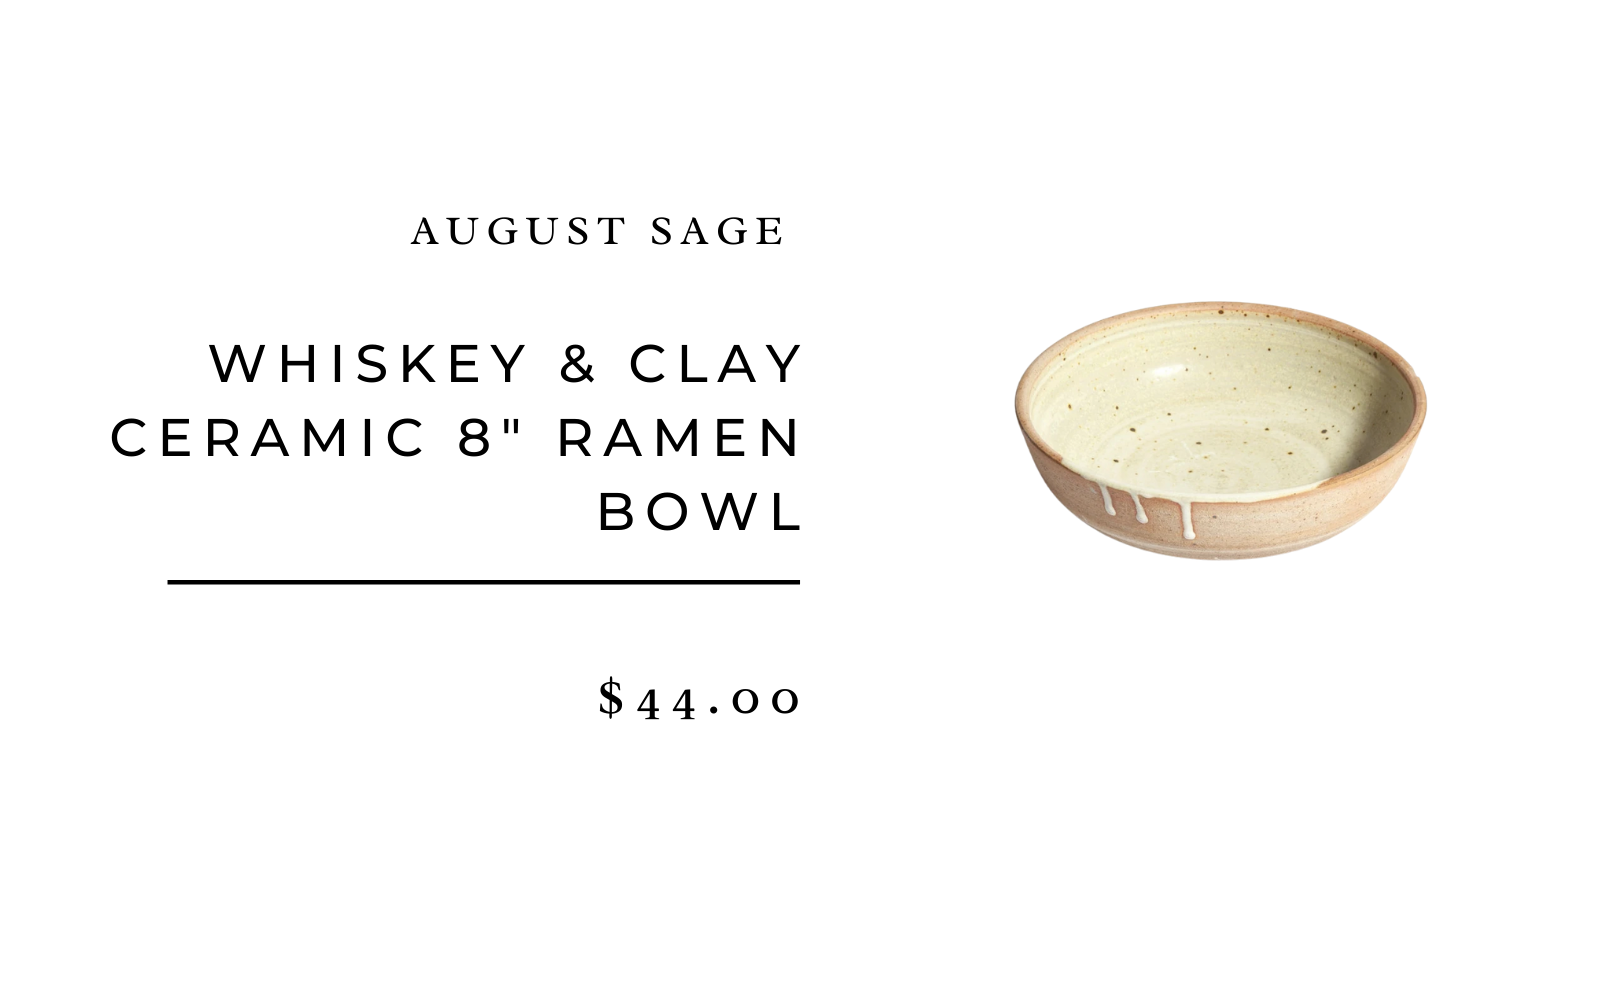 whiskey & clay ceramic ramen bowl- simple place setting ideas